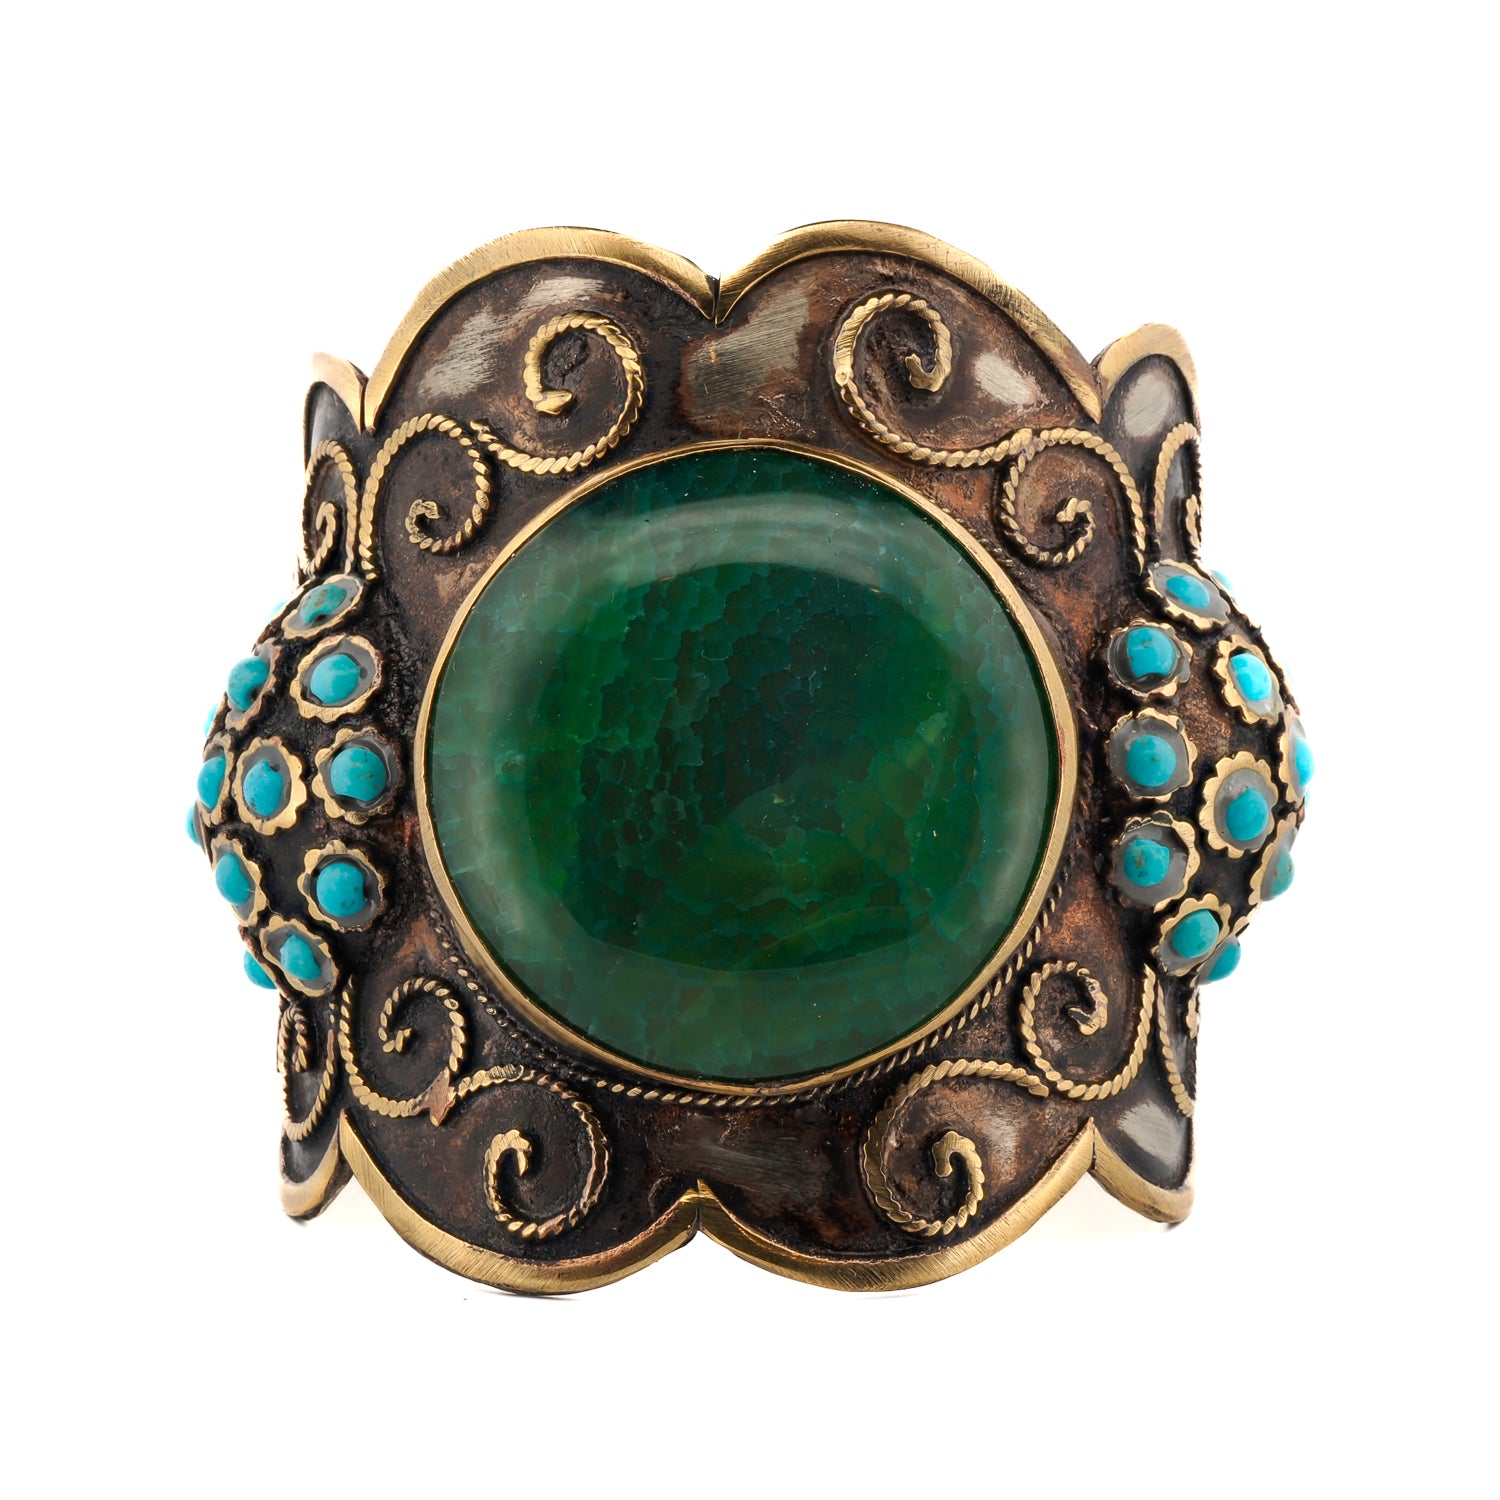 Handmade bracelet with vintage silver, turquoise, and jade gemstones